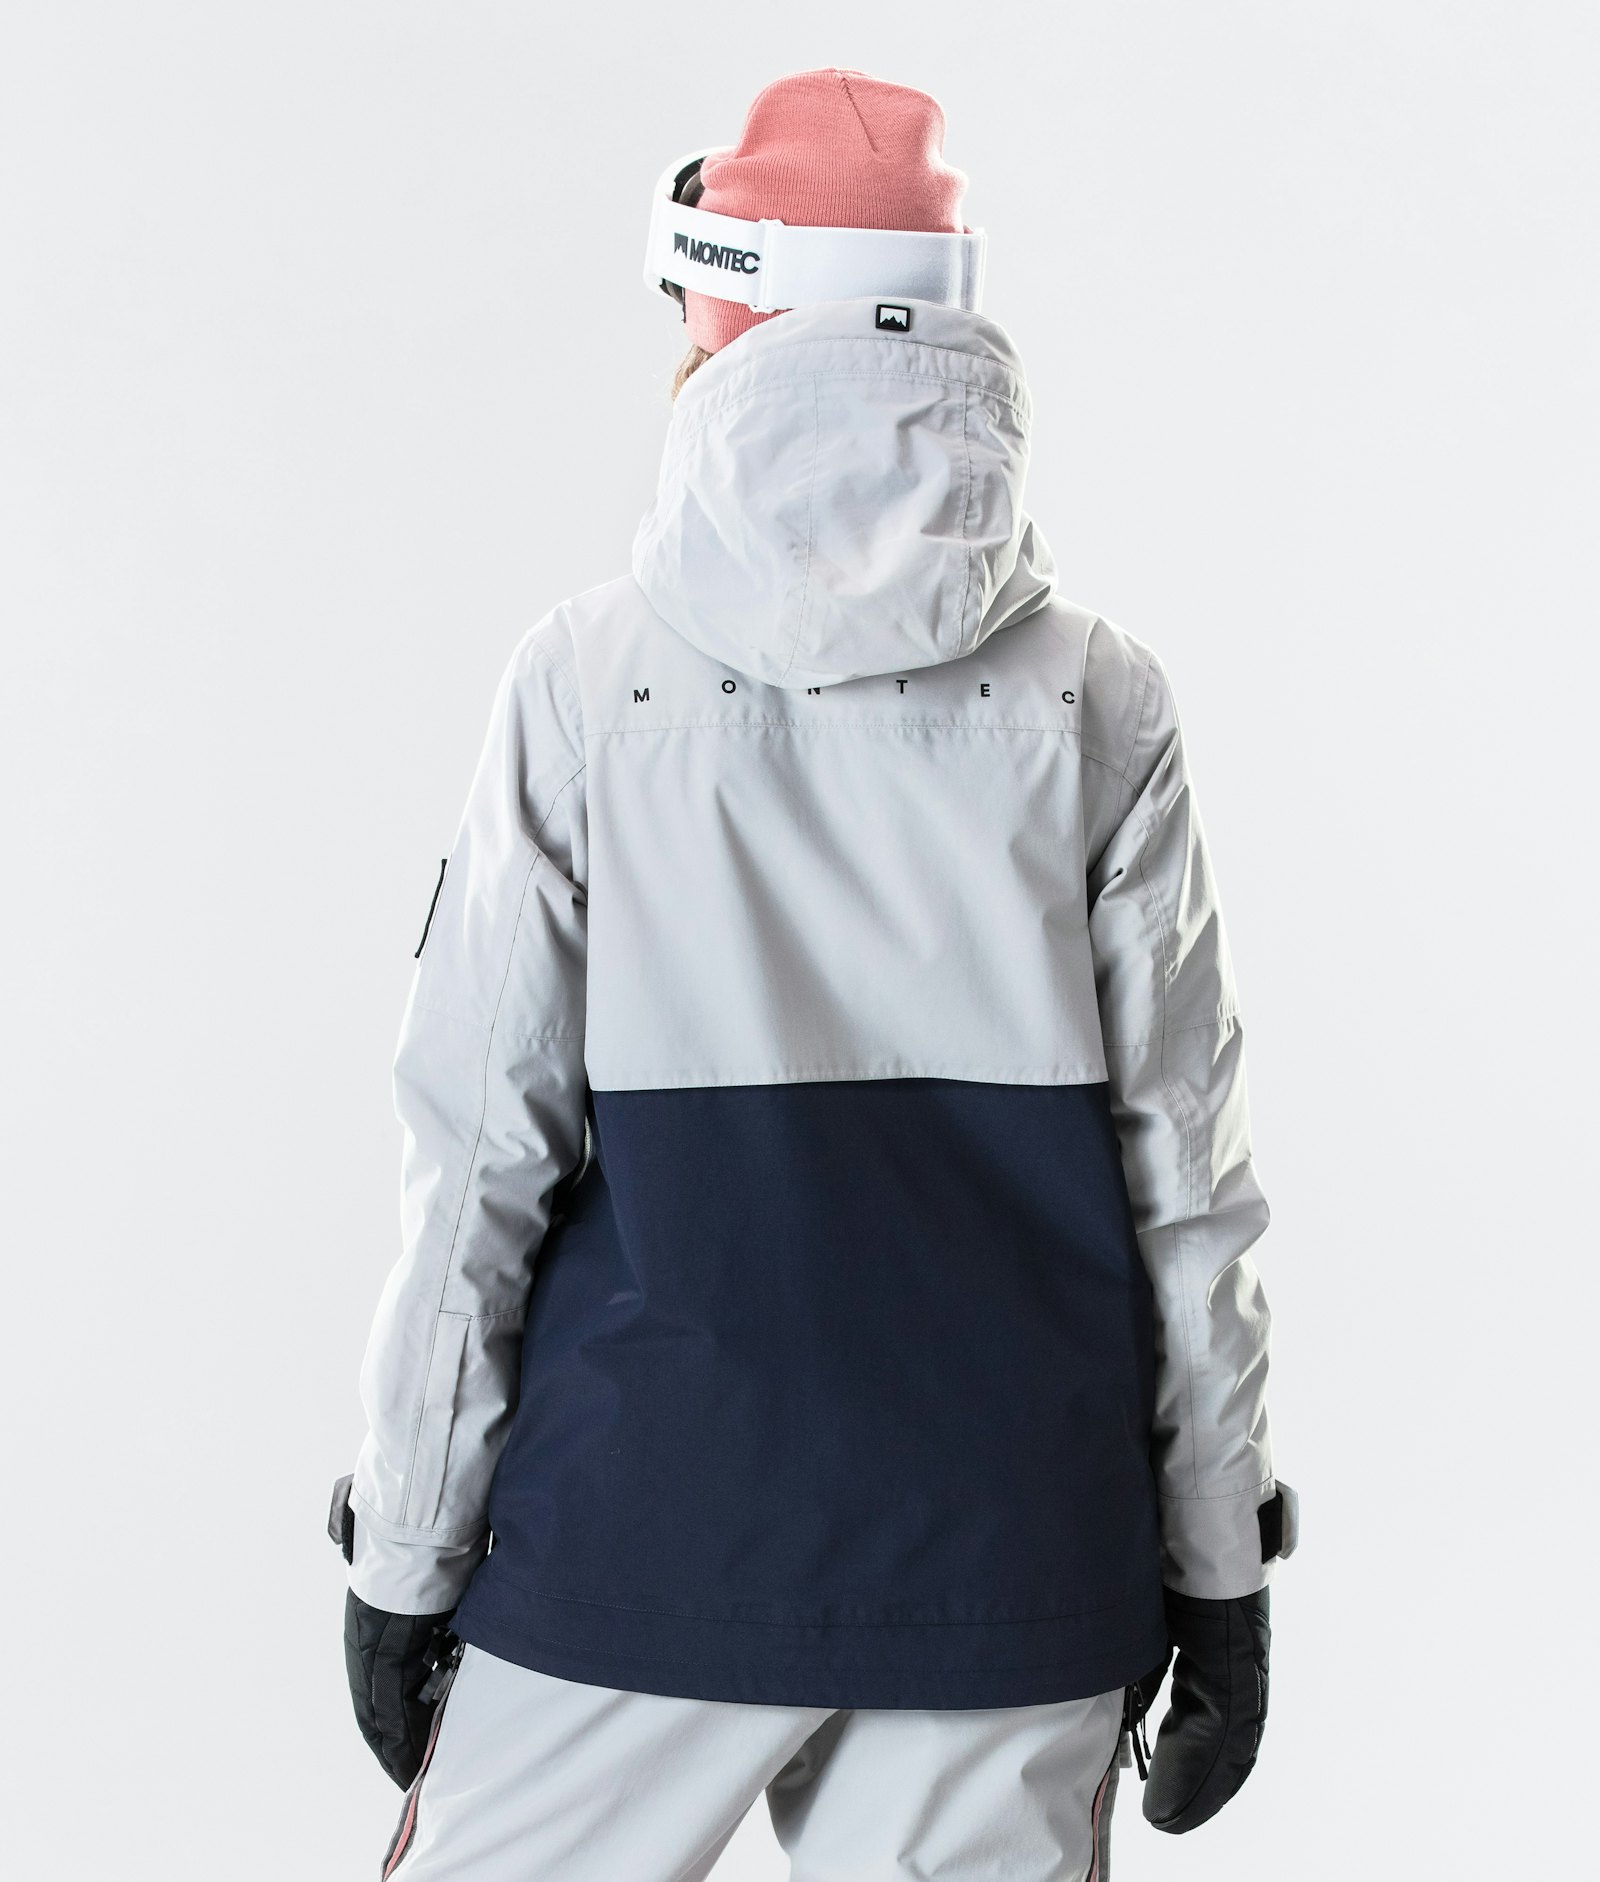 Doom W 2020 Snowboard Jacket Women Light Grey/Pink/Marine